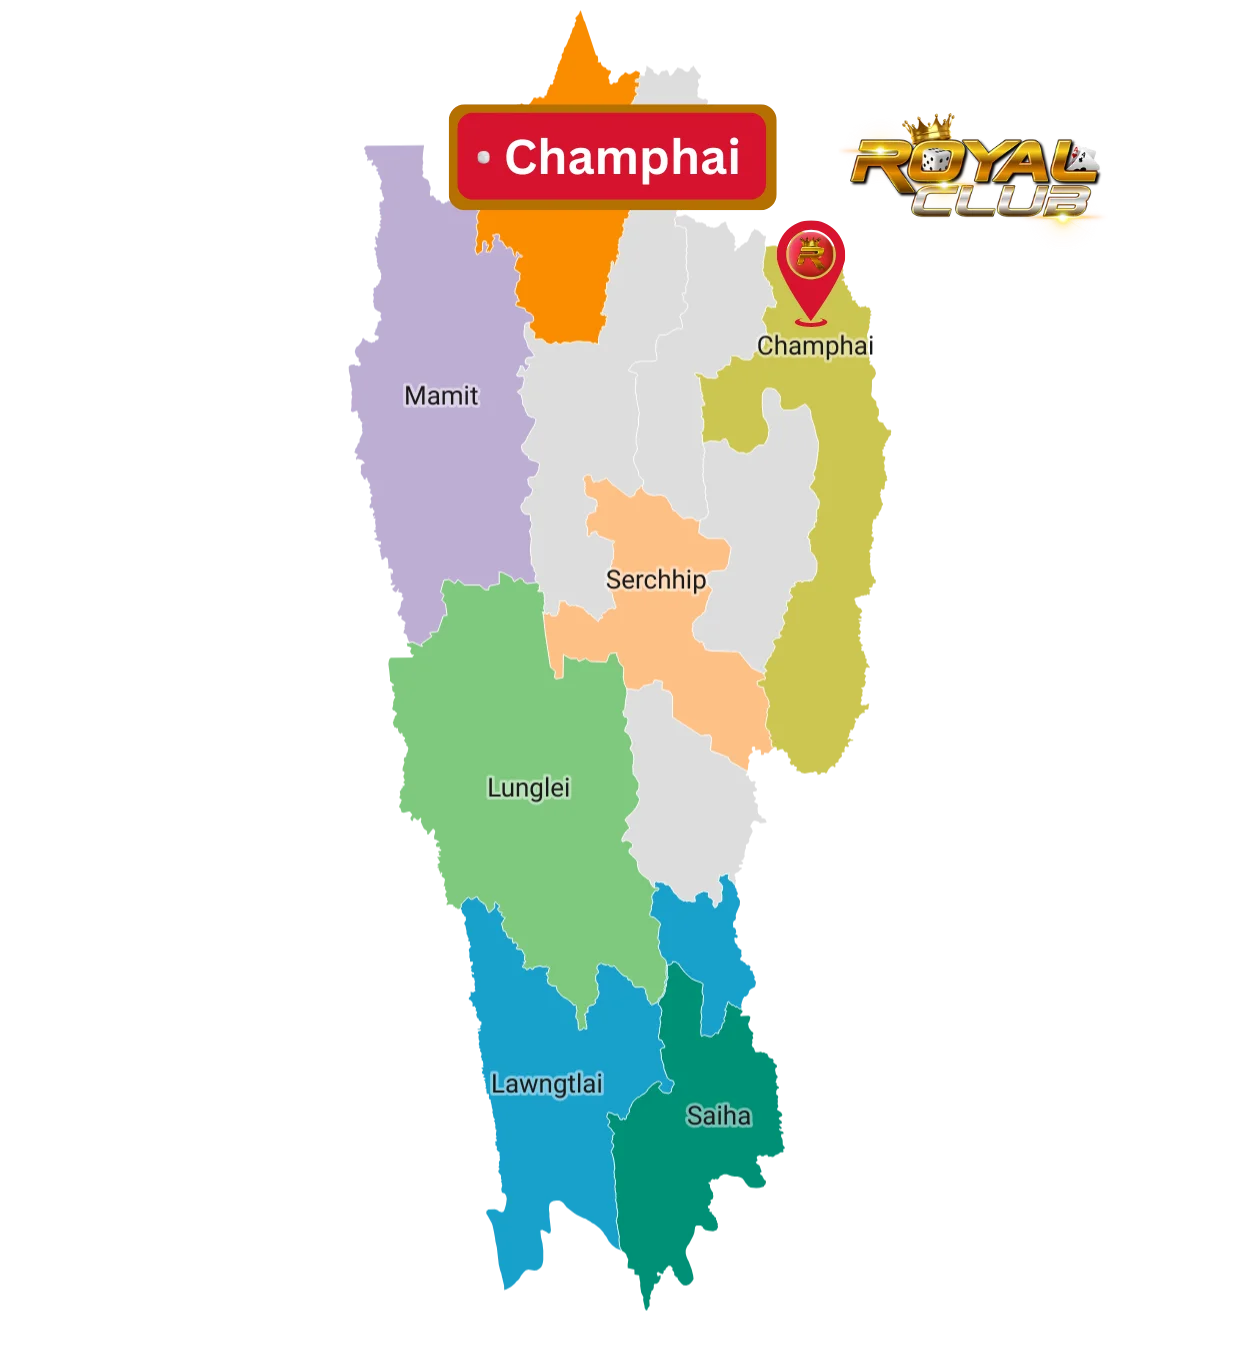 Aviator Game in Champhai